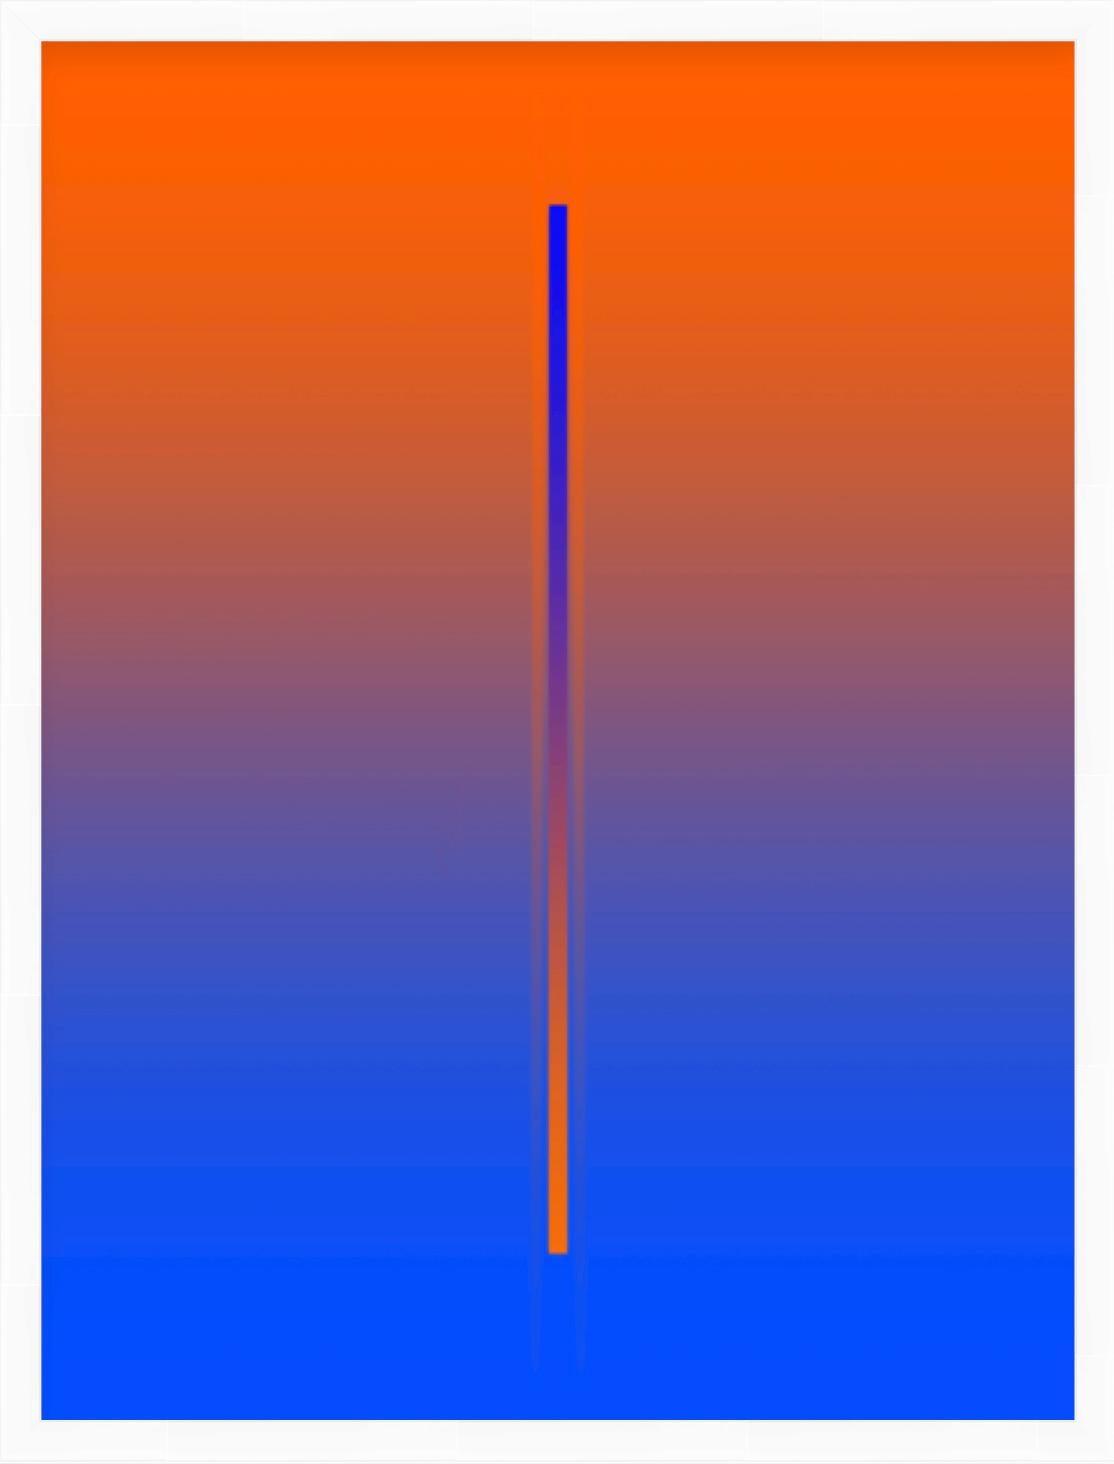 Pletneva Abstract Print - "Lunar Year" - minimalistic digital print, orange and blue, white frame